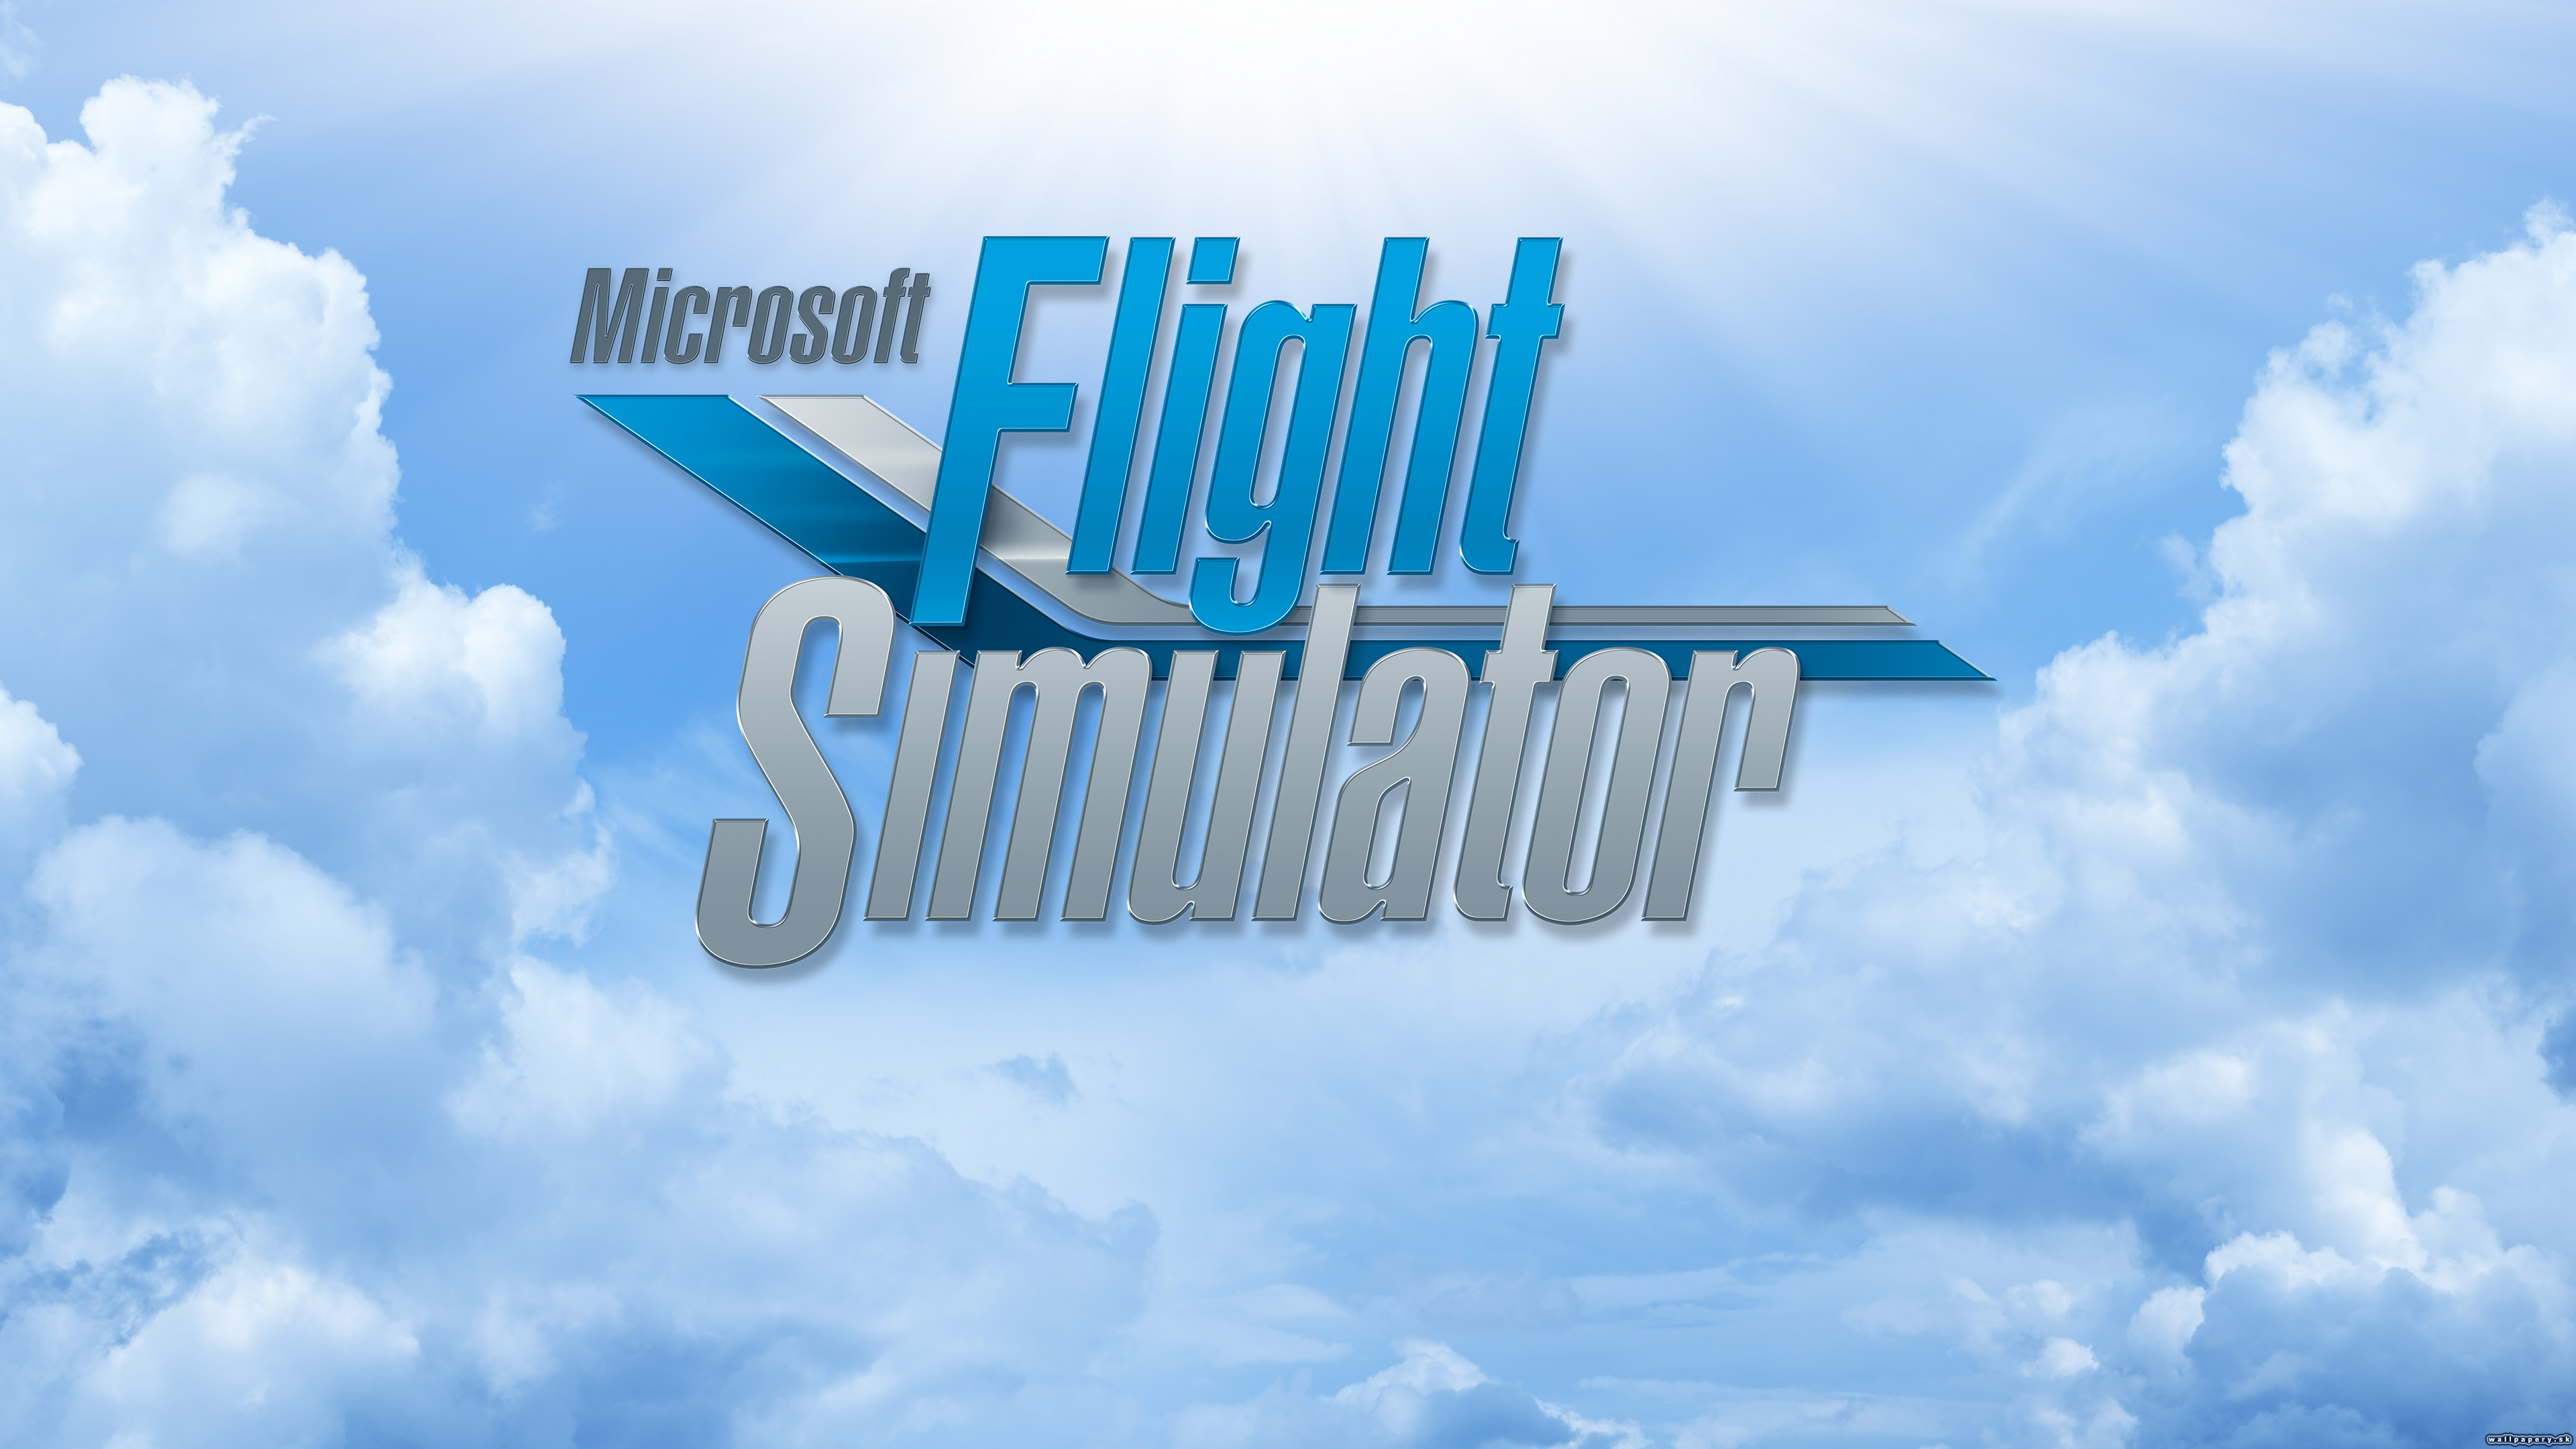 Microsoft Flight Simulator - wallpaper 2